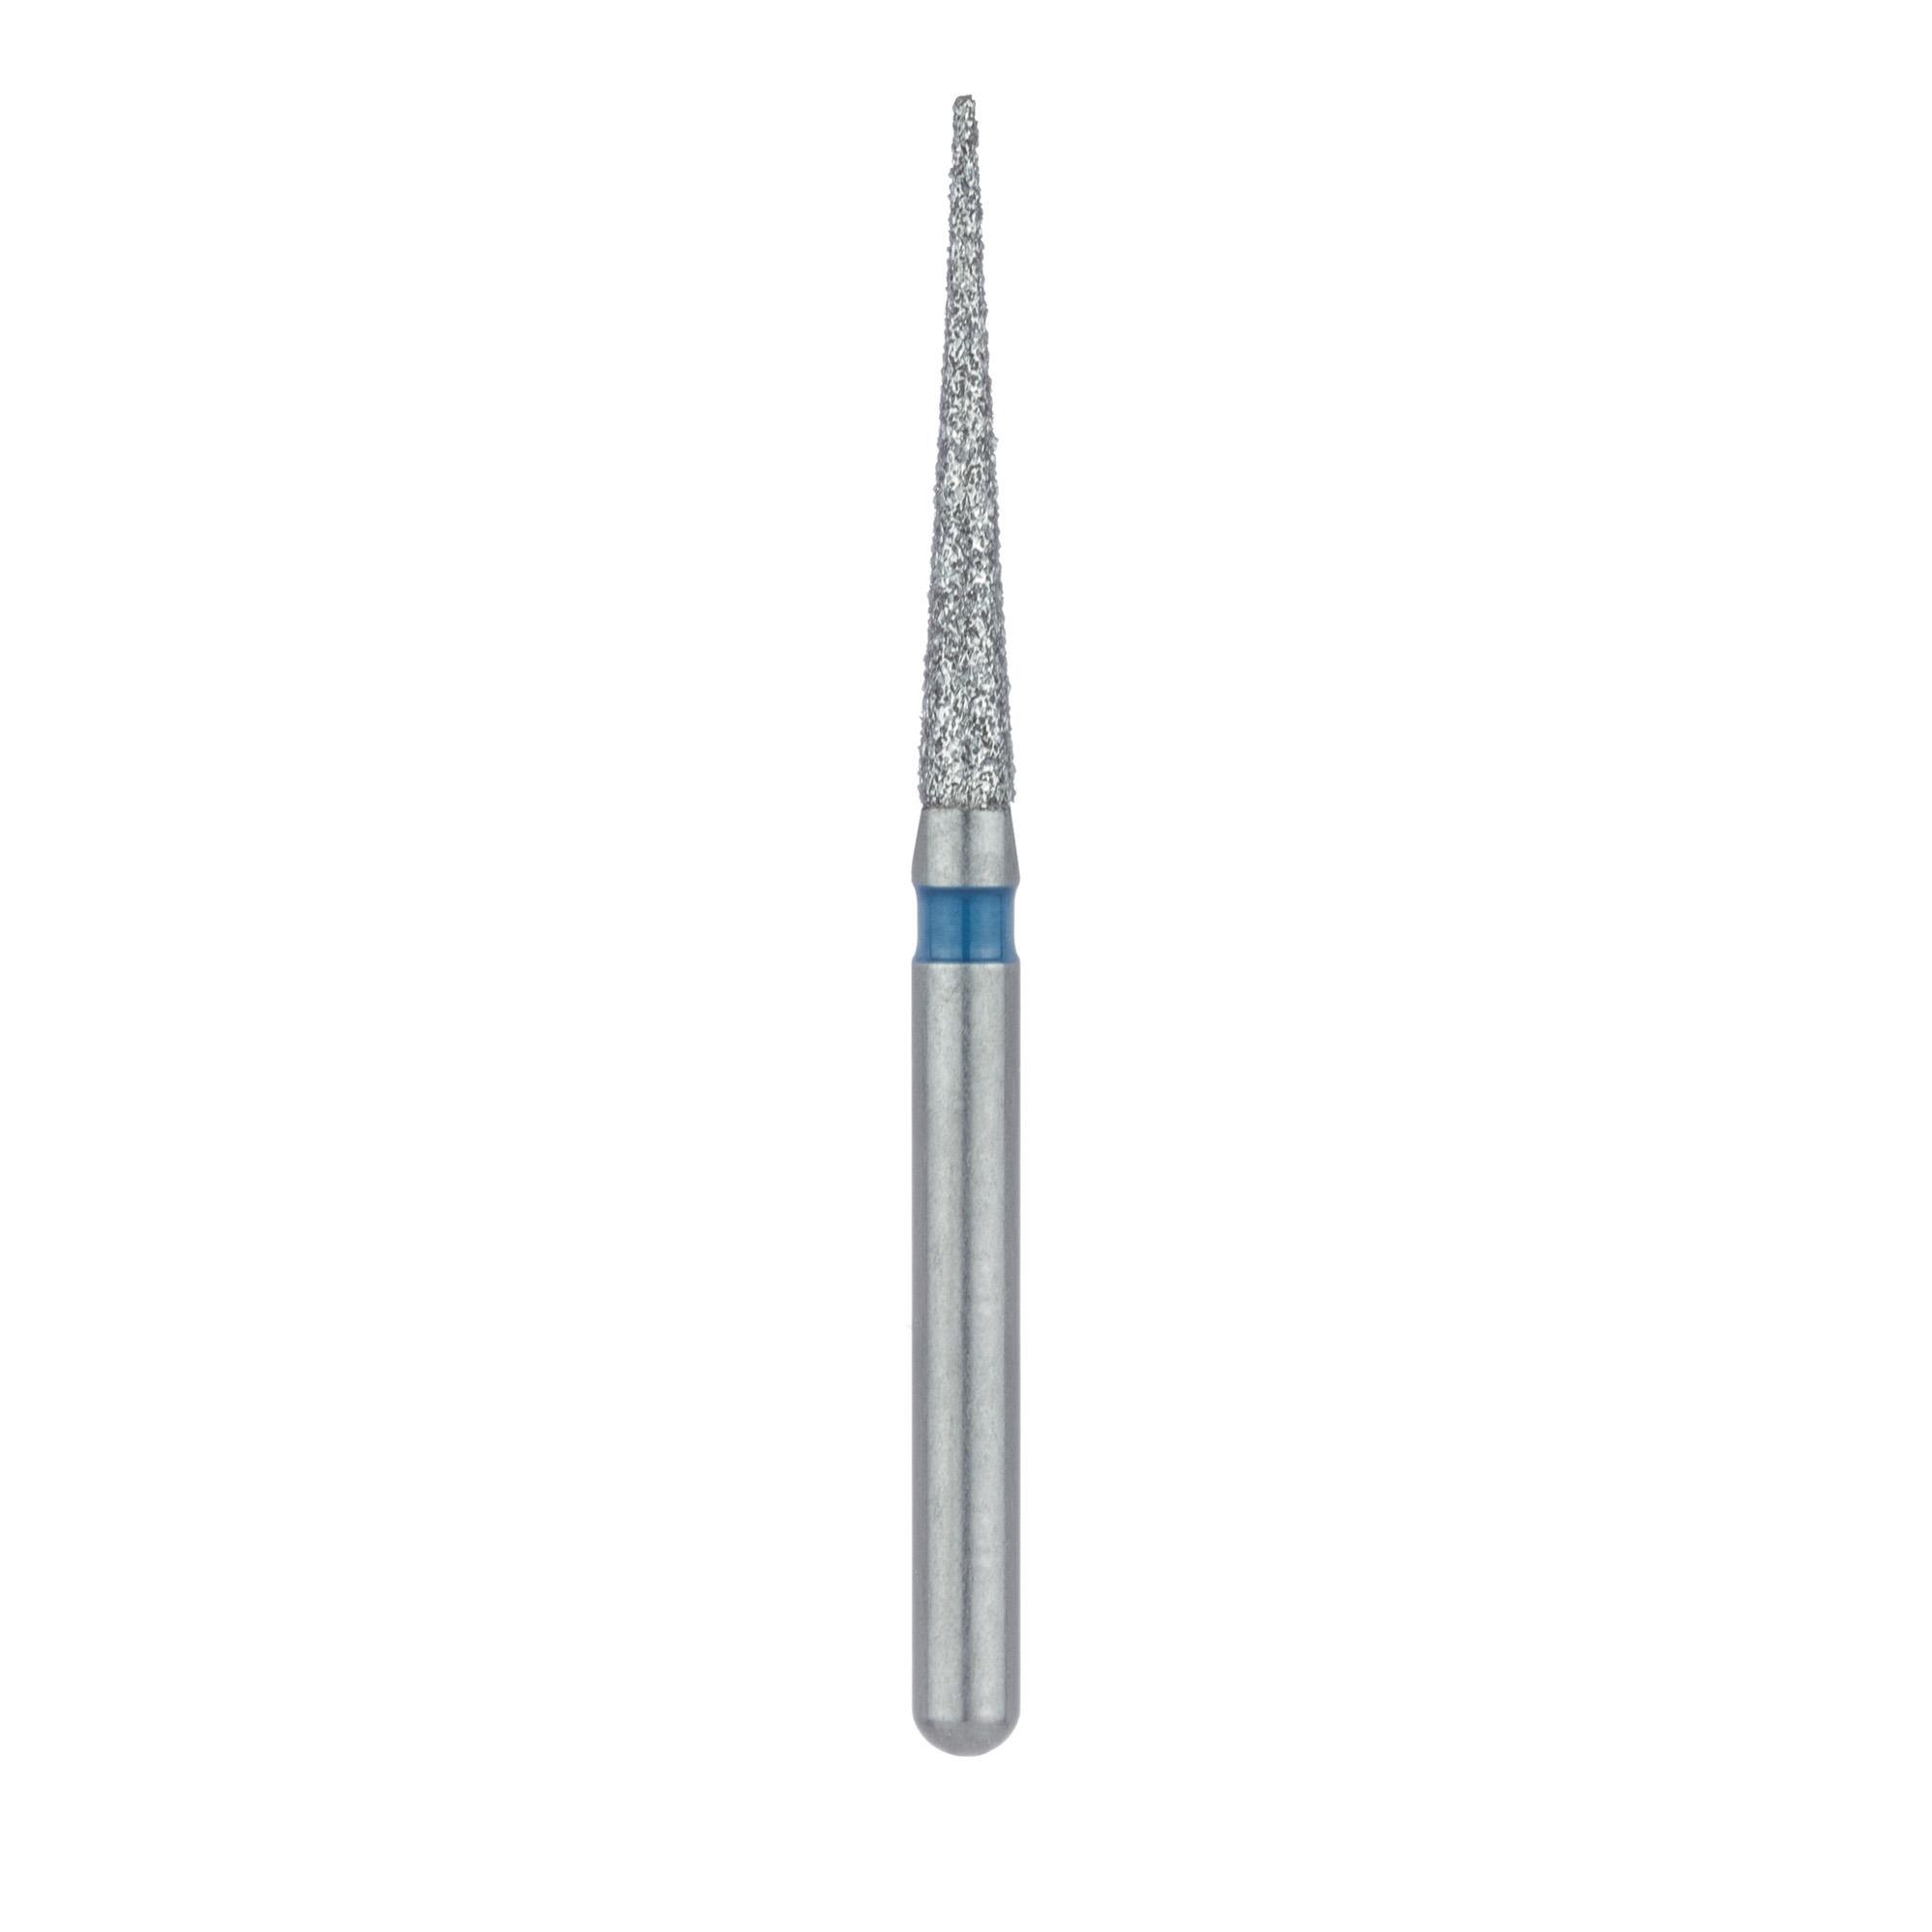 859-014-FG Long Needle Diamond Bur, Interproximal Reduction, 1.4mm Ø, Medium, FG